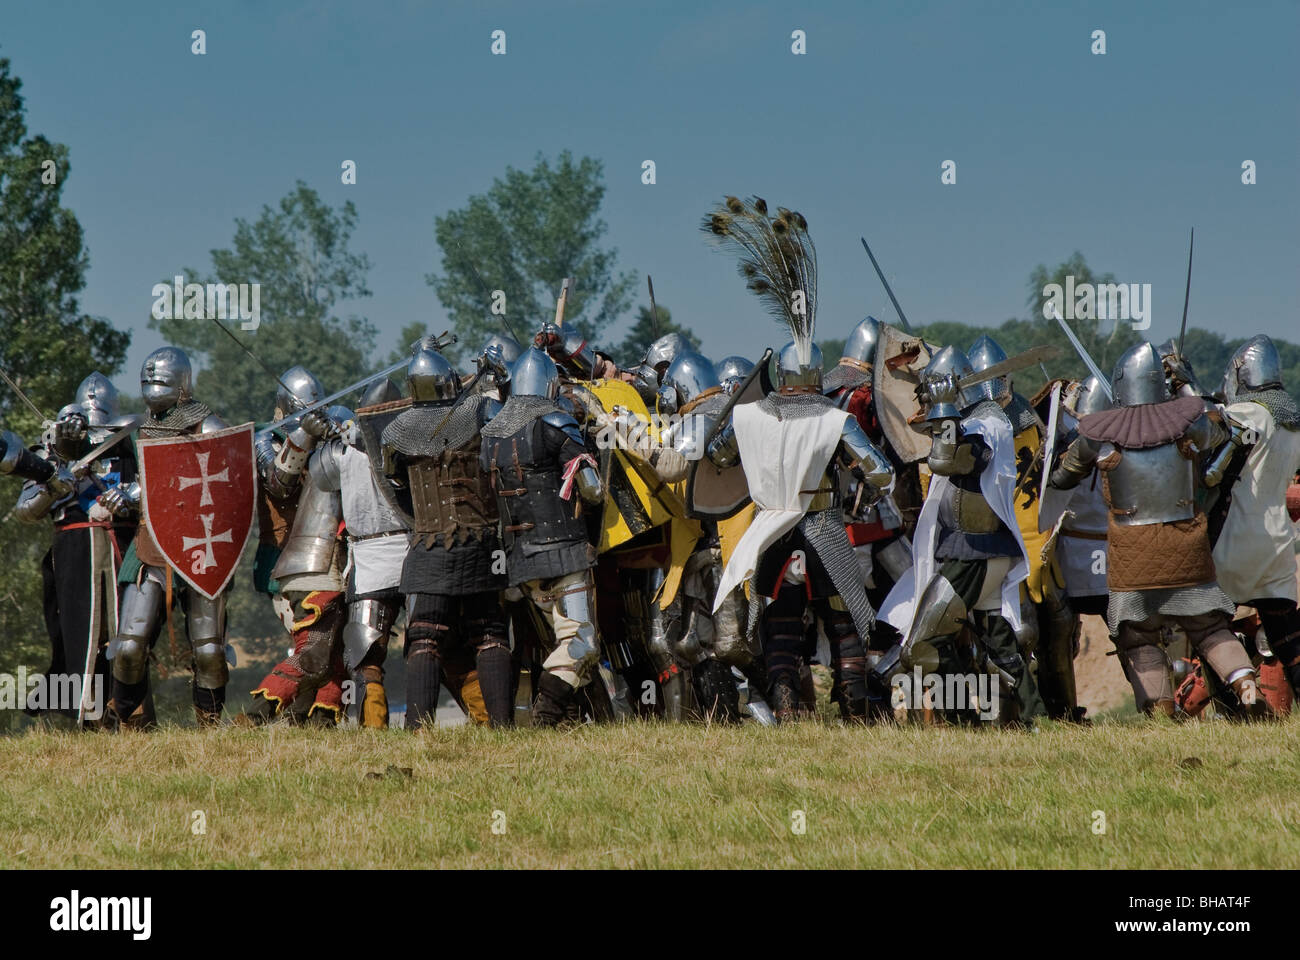 Reenactors at Battle of Grunwald of 1410 in Warminsko-Mazurskie province, Poland Stock Photo